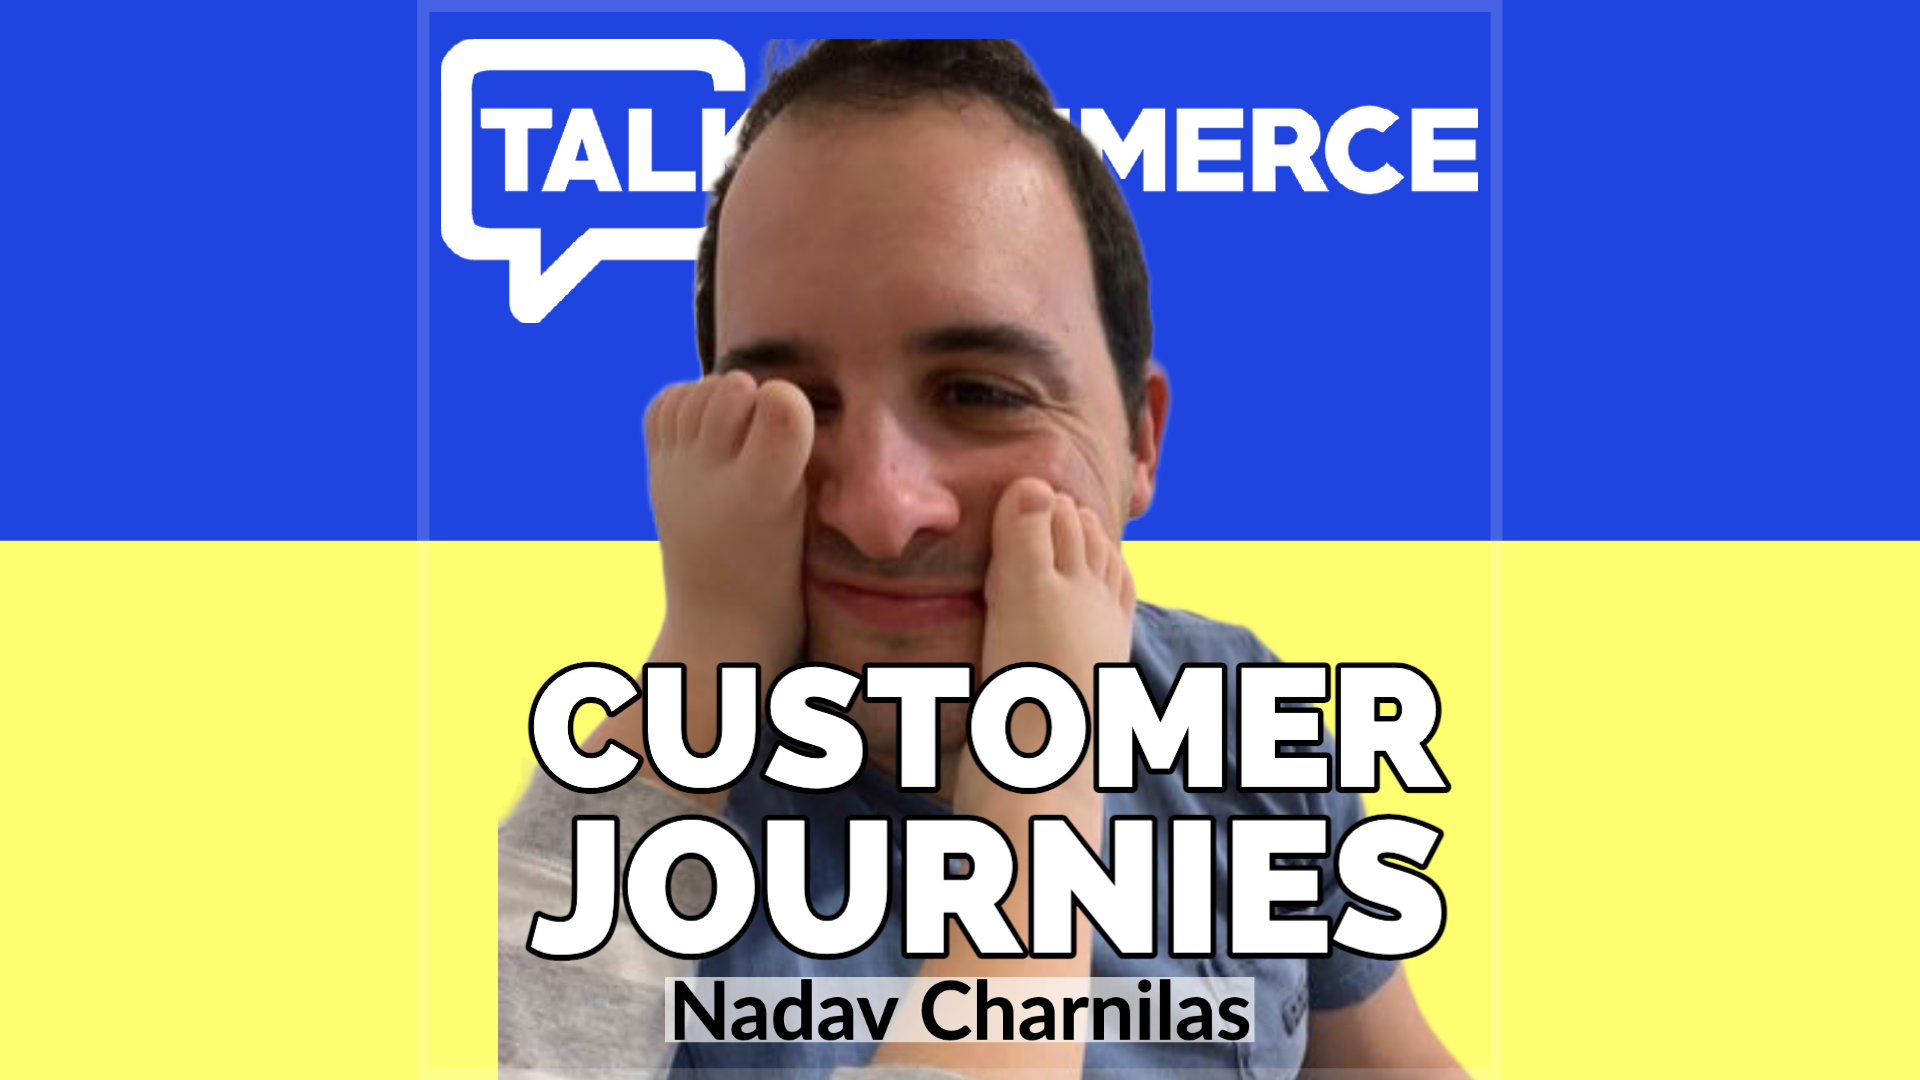 Talk-Commerce Nadav Charnilas